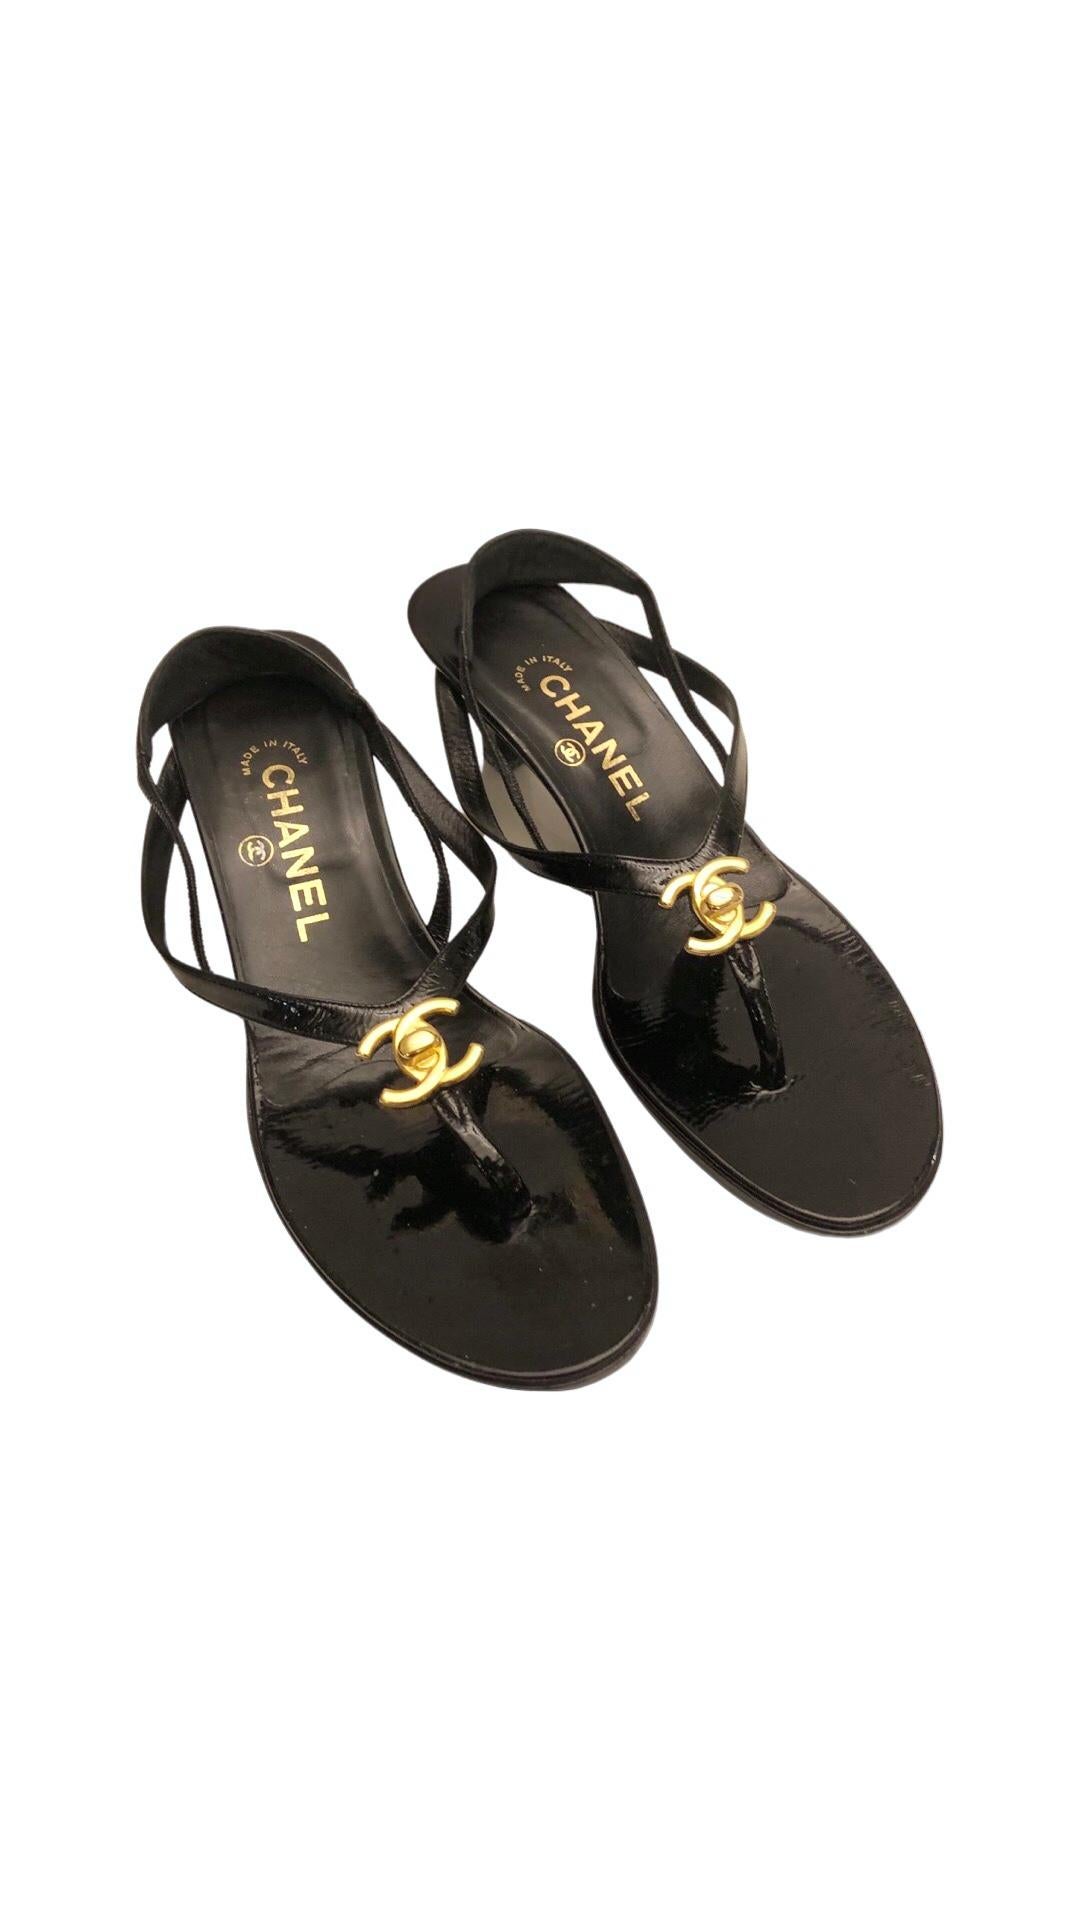 - Vintage 90s Chanel gold hardware CC black patent leather sandals heels. 

- size 38.5 

